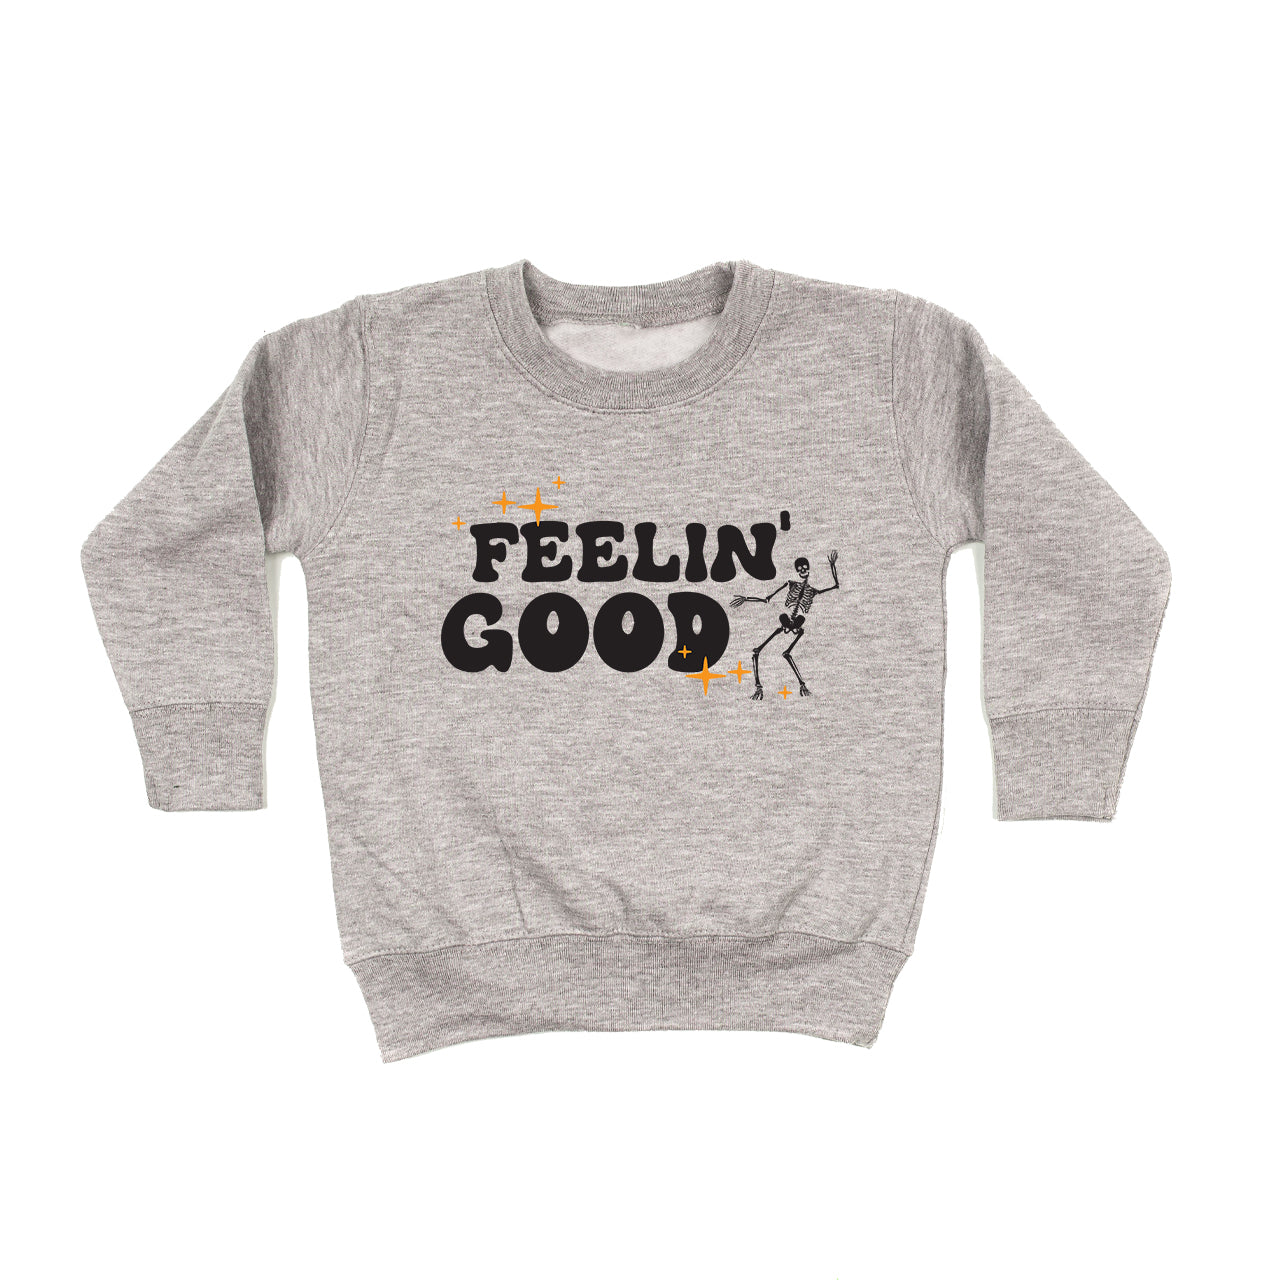 Feelin' Good Skeleton - Kids Sweatshirt (Heather Gray)